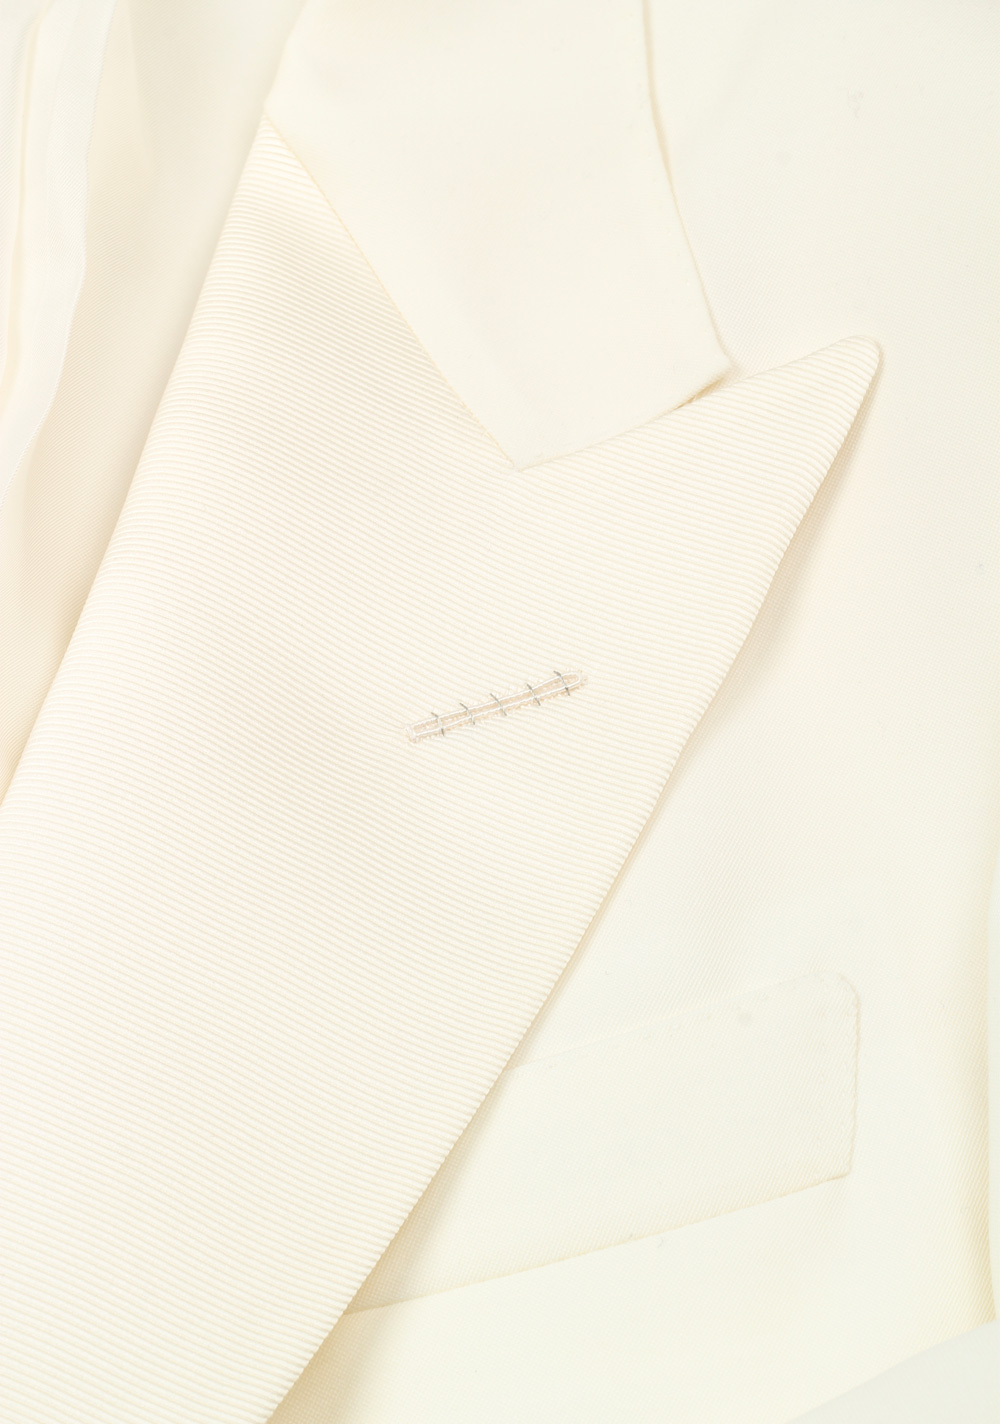 TOM FORD Windsor Ivory Signature Tuxedo Dinner Jacket | Costume Limité